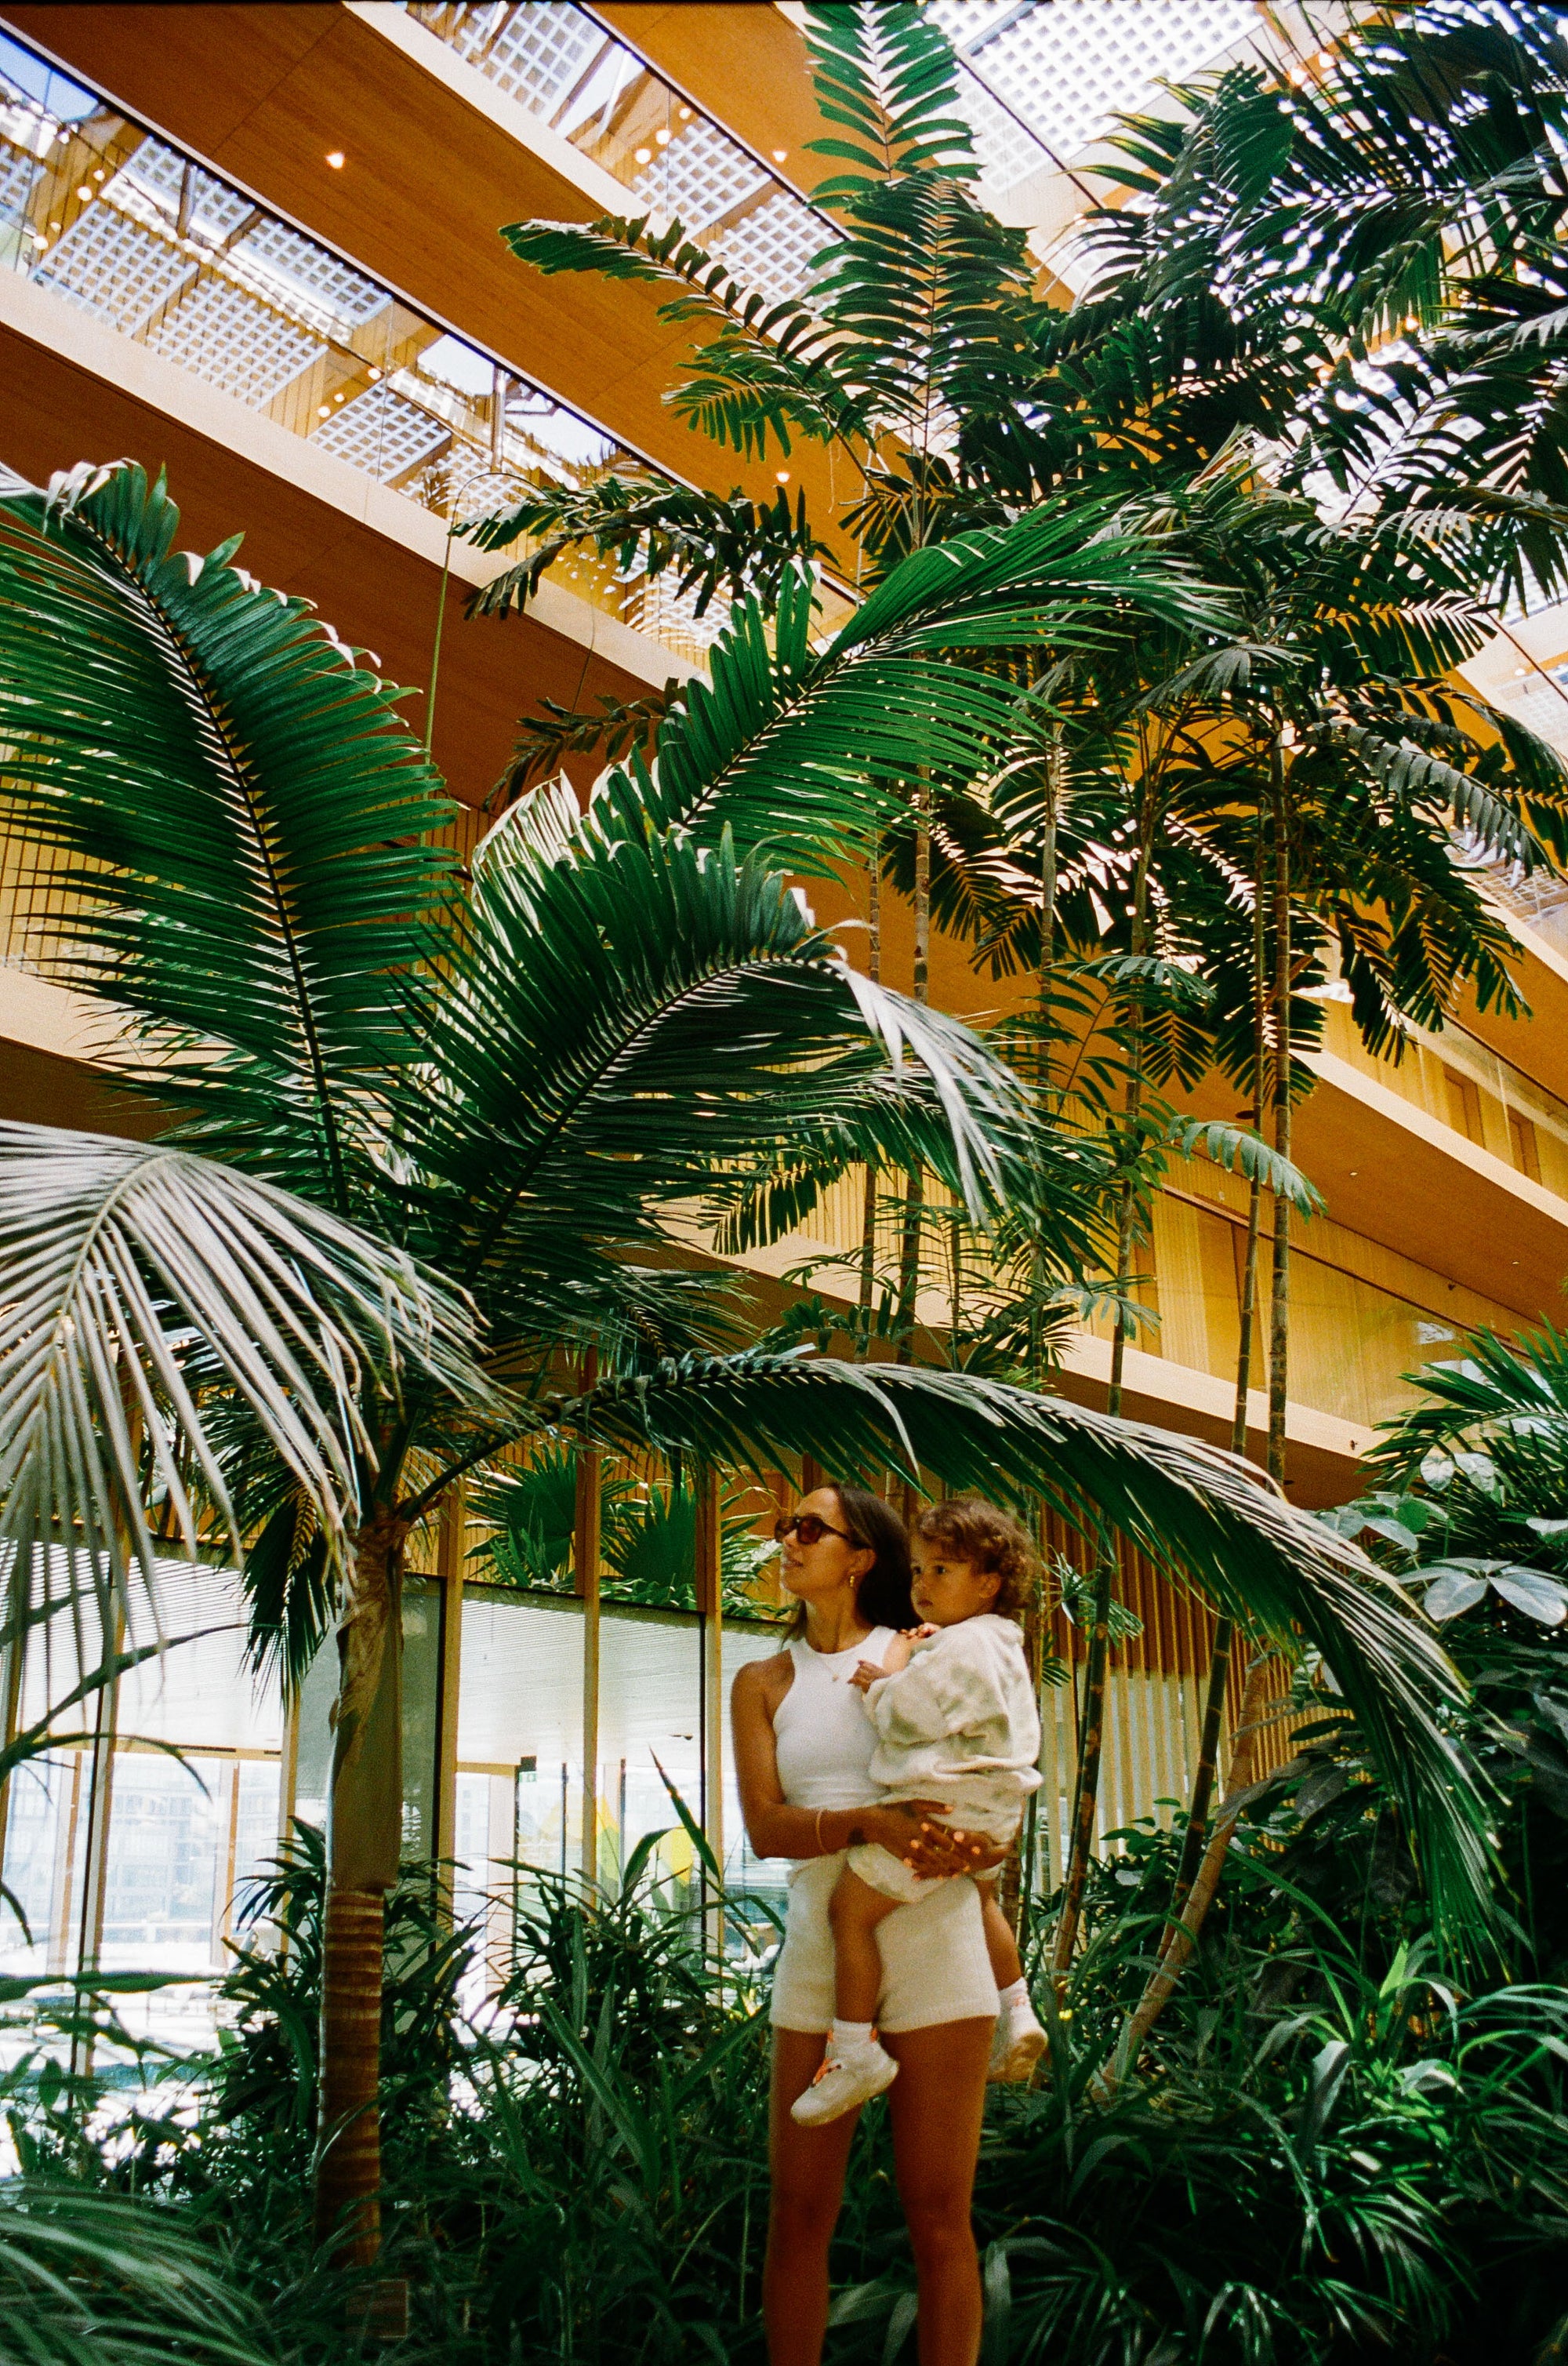 A tropical escape: Hotel Jakarta in Amsterdam